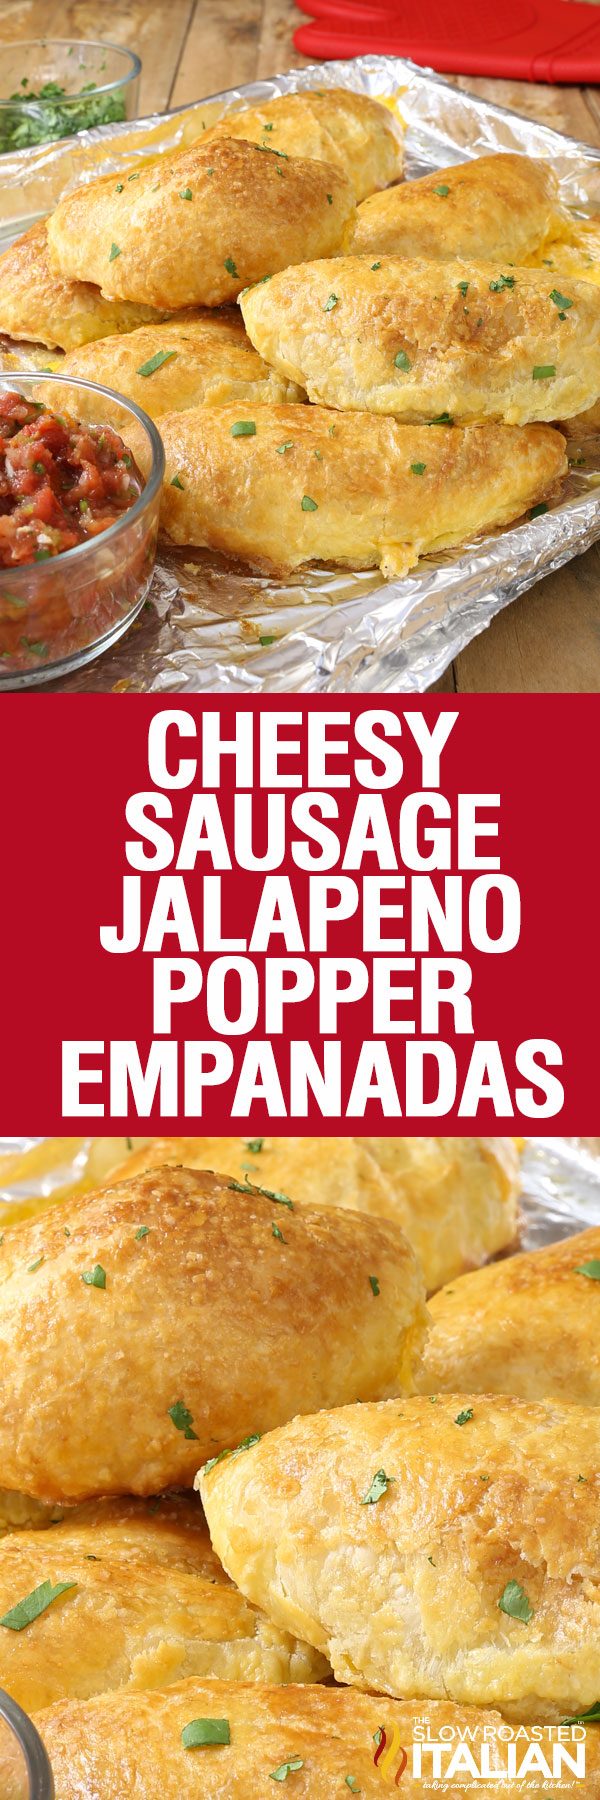 titled collage for spicy sausage empanadas recipe